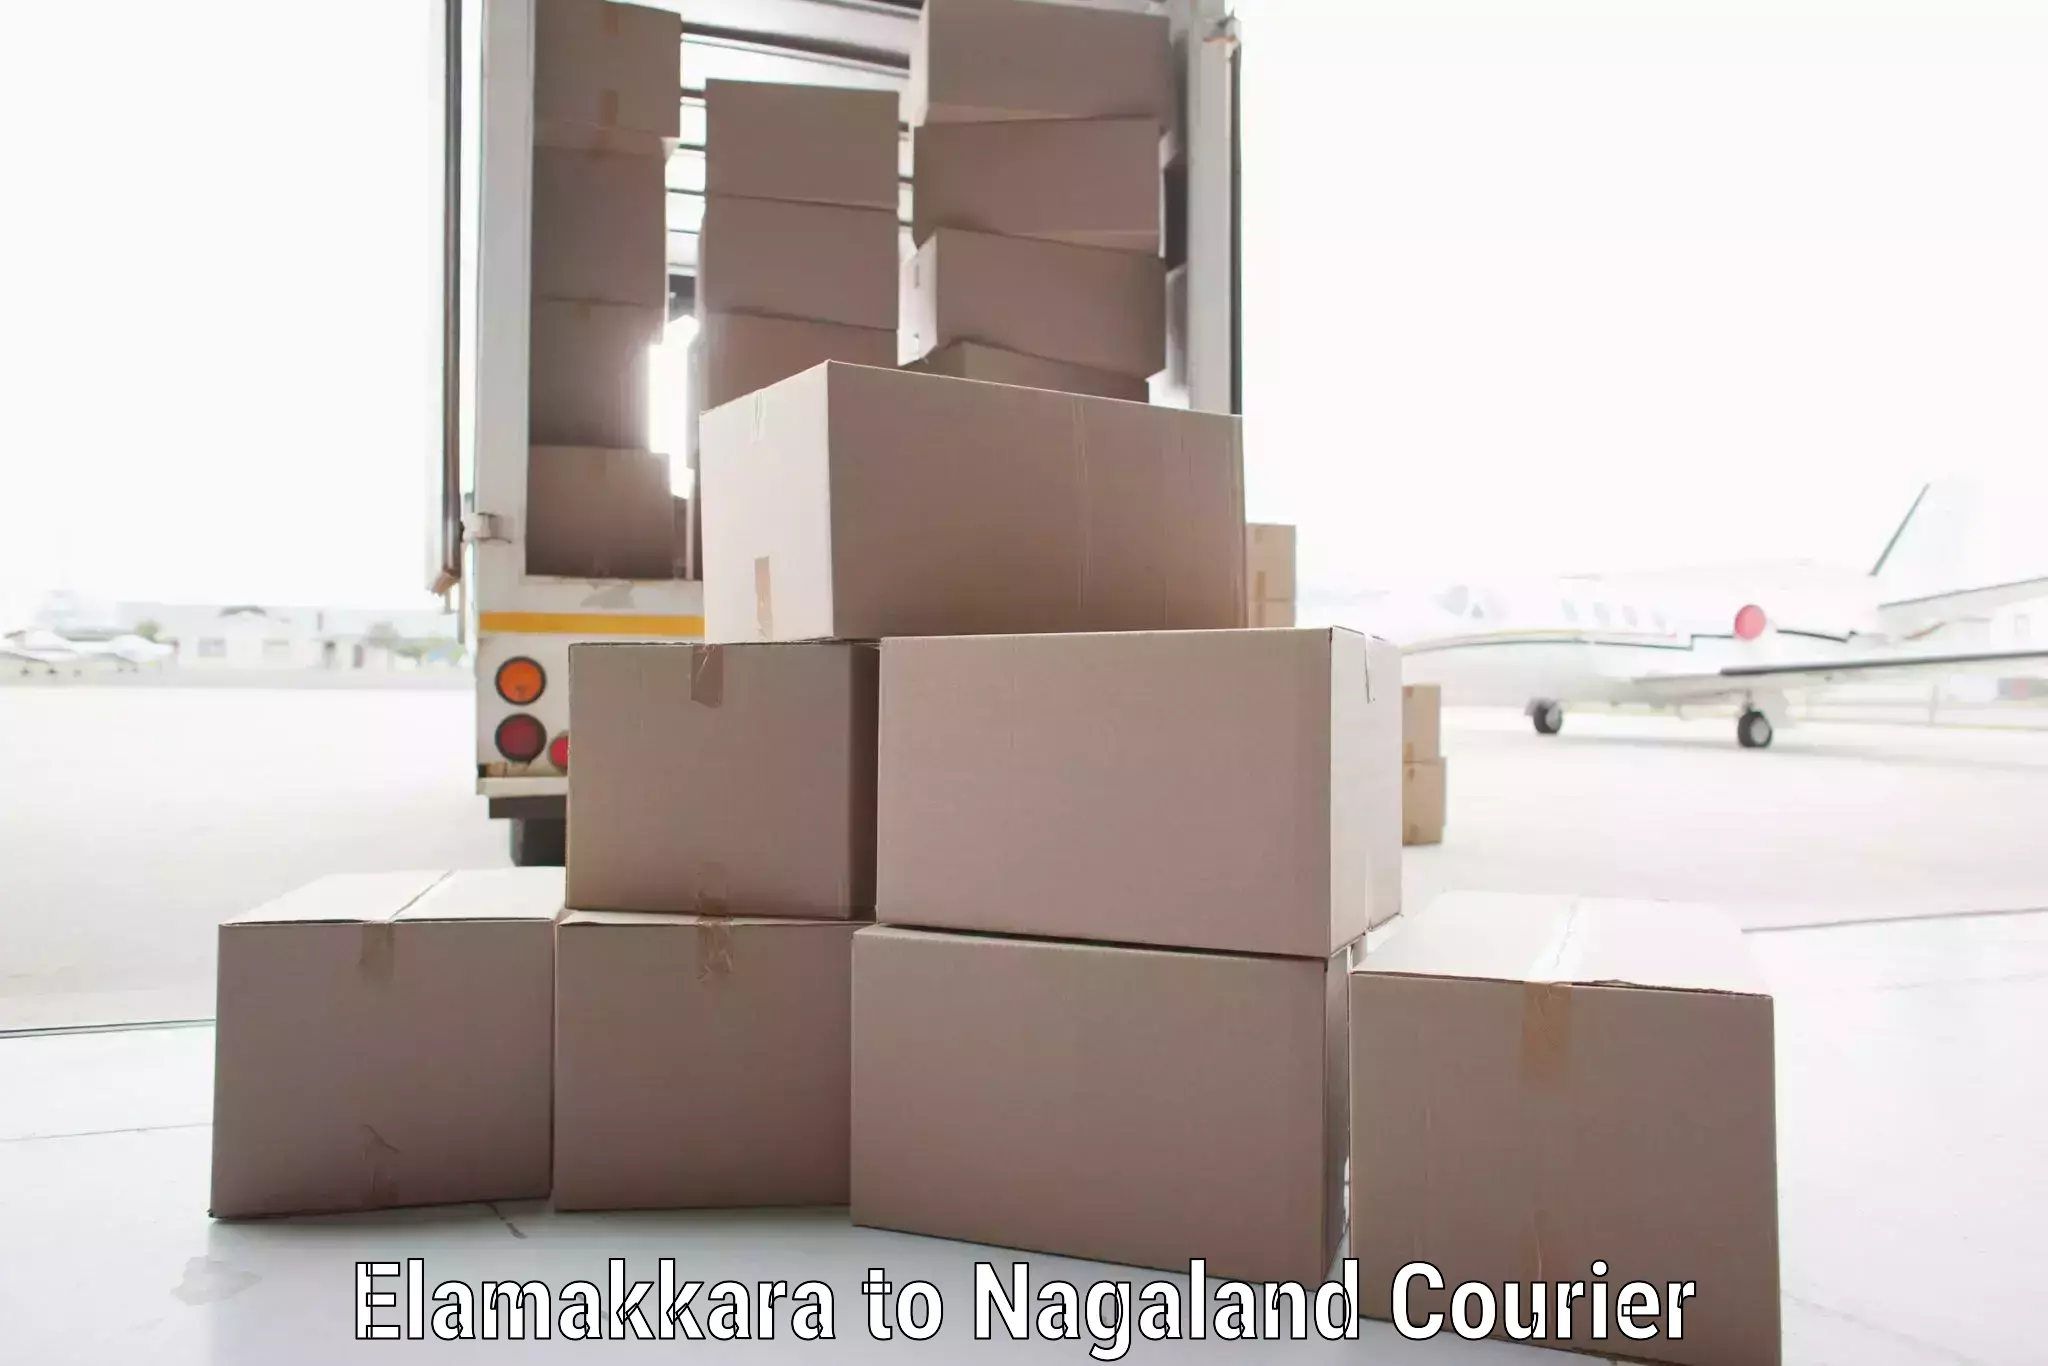 Package delivery network Elamakkara to Dimapur